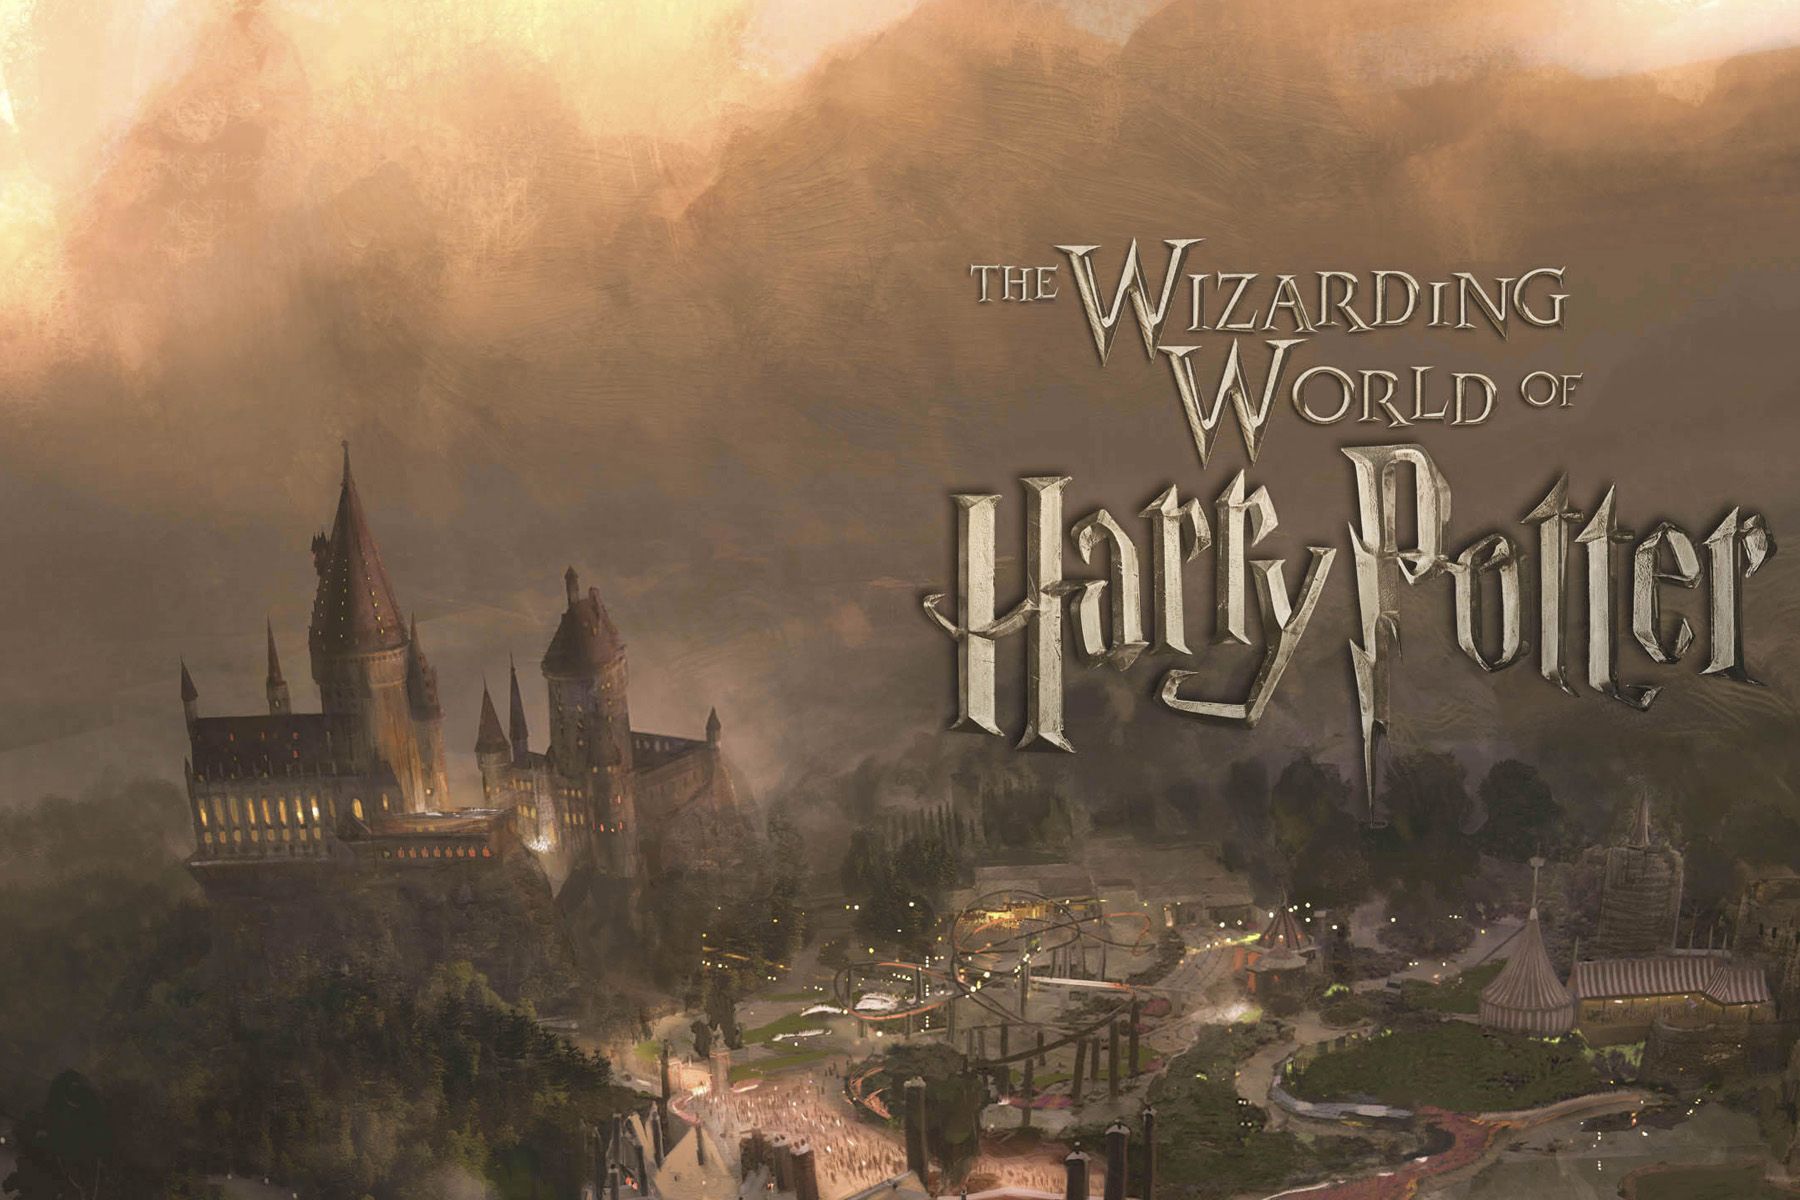 Wizarding World of Harry Potter Wallpaper. Wizarding World of Harry Potter Wallpaper, The Wizarding World of Harry Potter Wallpaper and Harry Potter iPhone Wallpaper